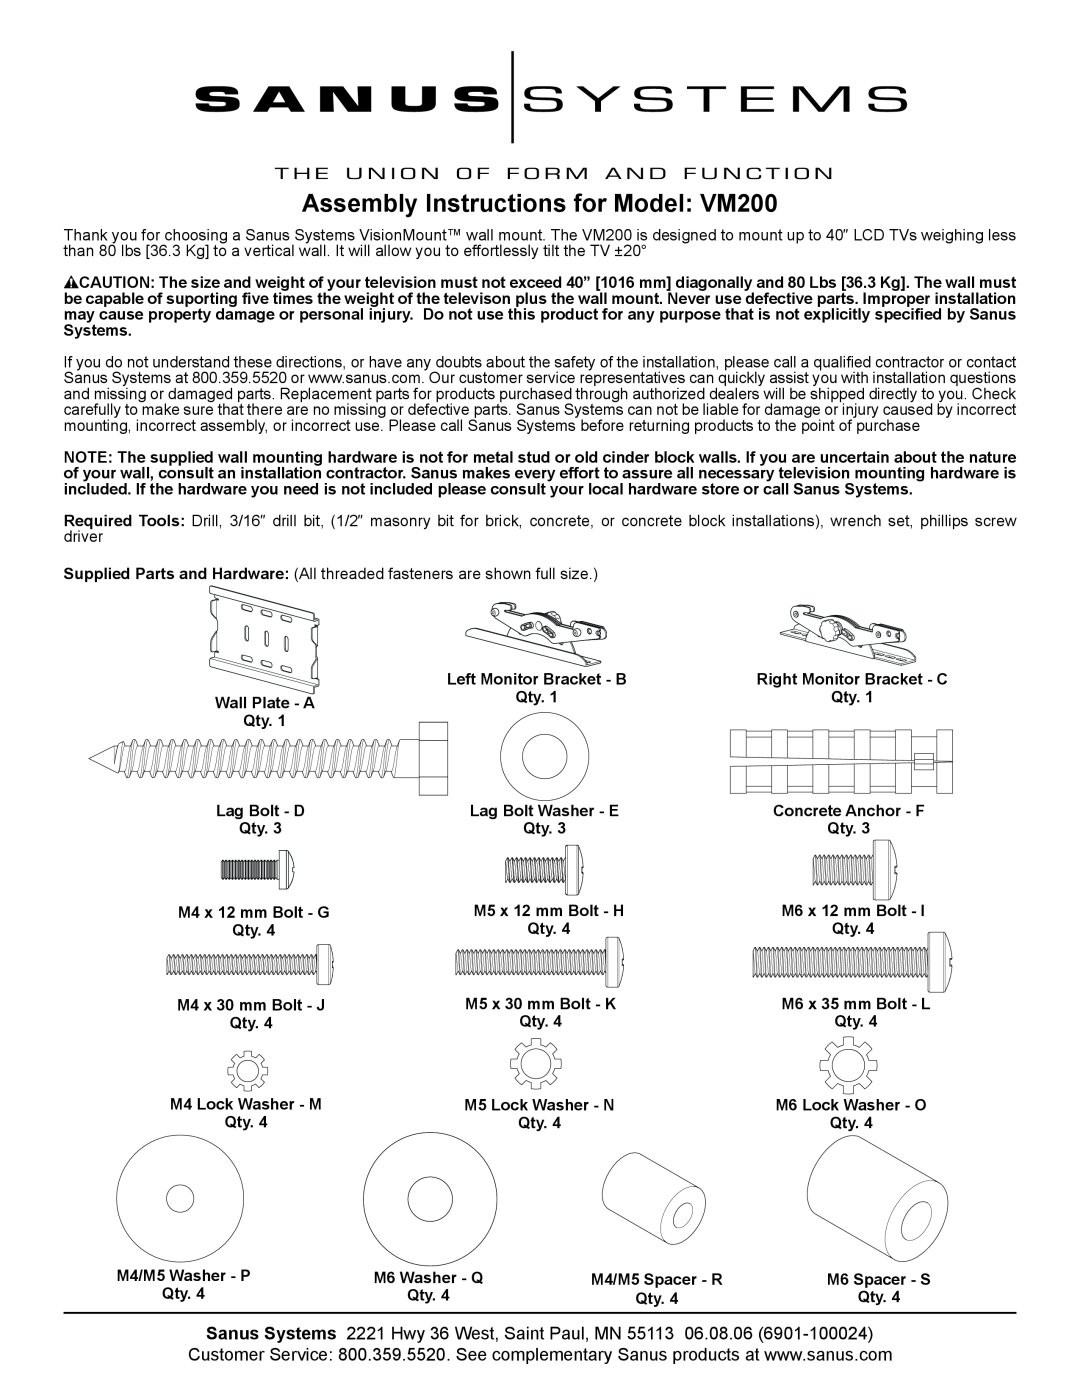 Sanus Systems manual Assembly Instructions for Model VM200 